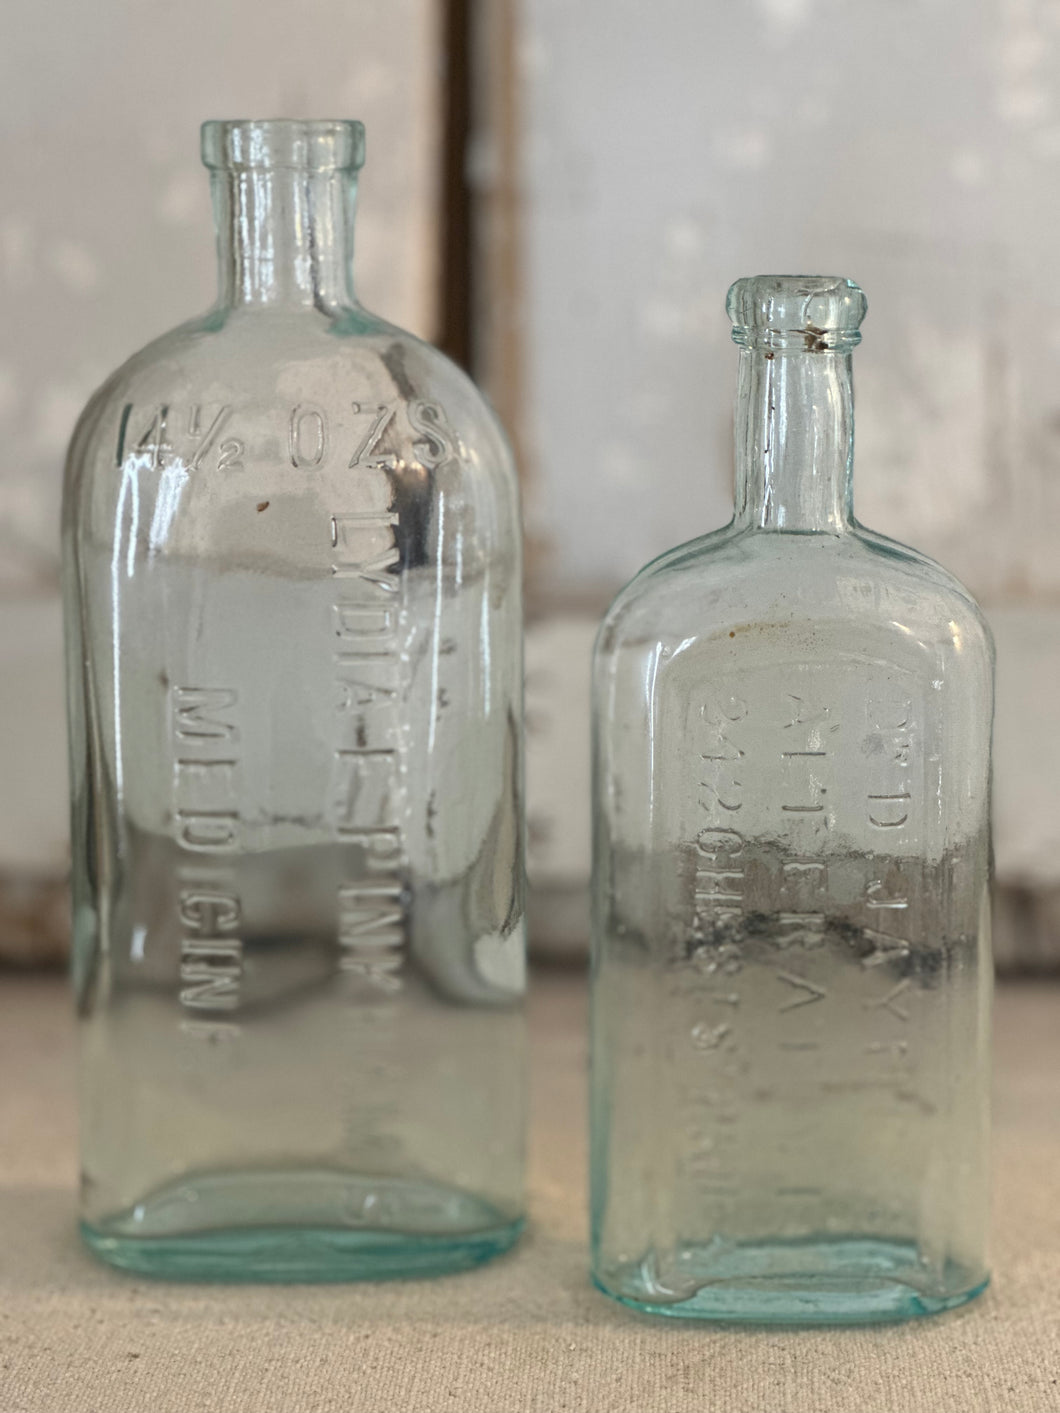 dr d jayne.s and lydia e. pinkham's medicine aqua bottles - set of two